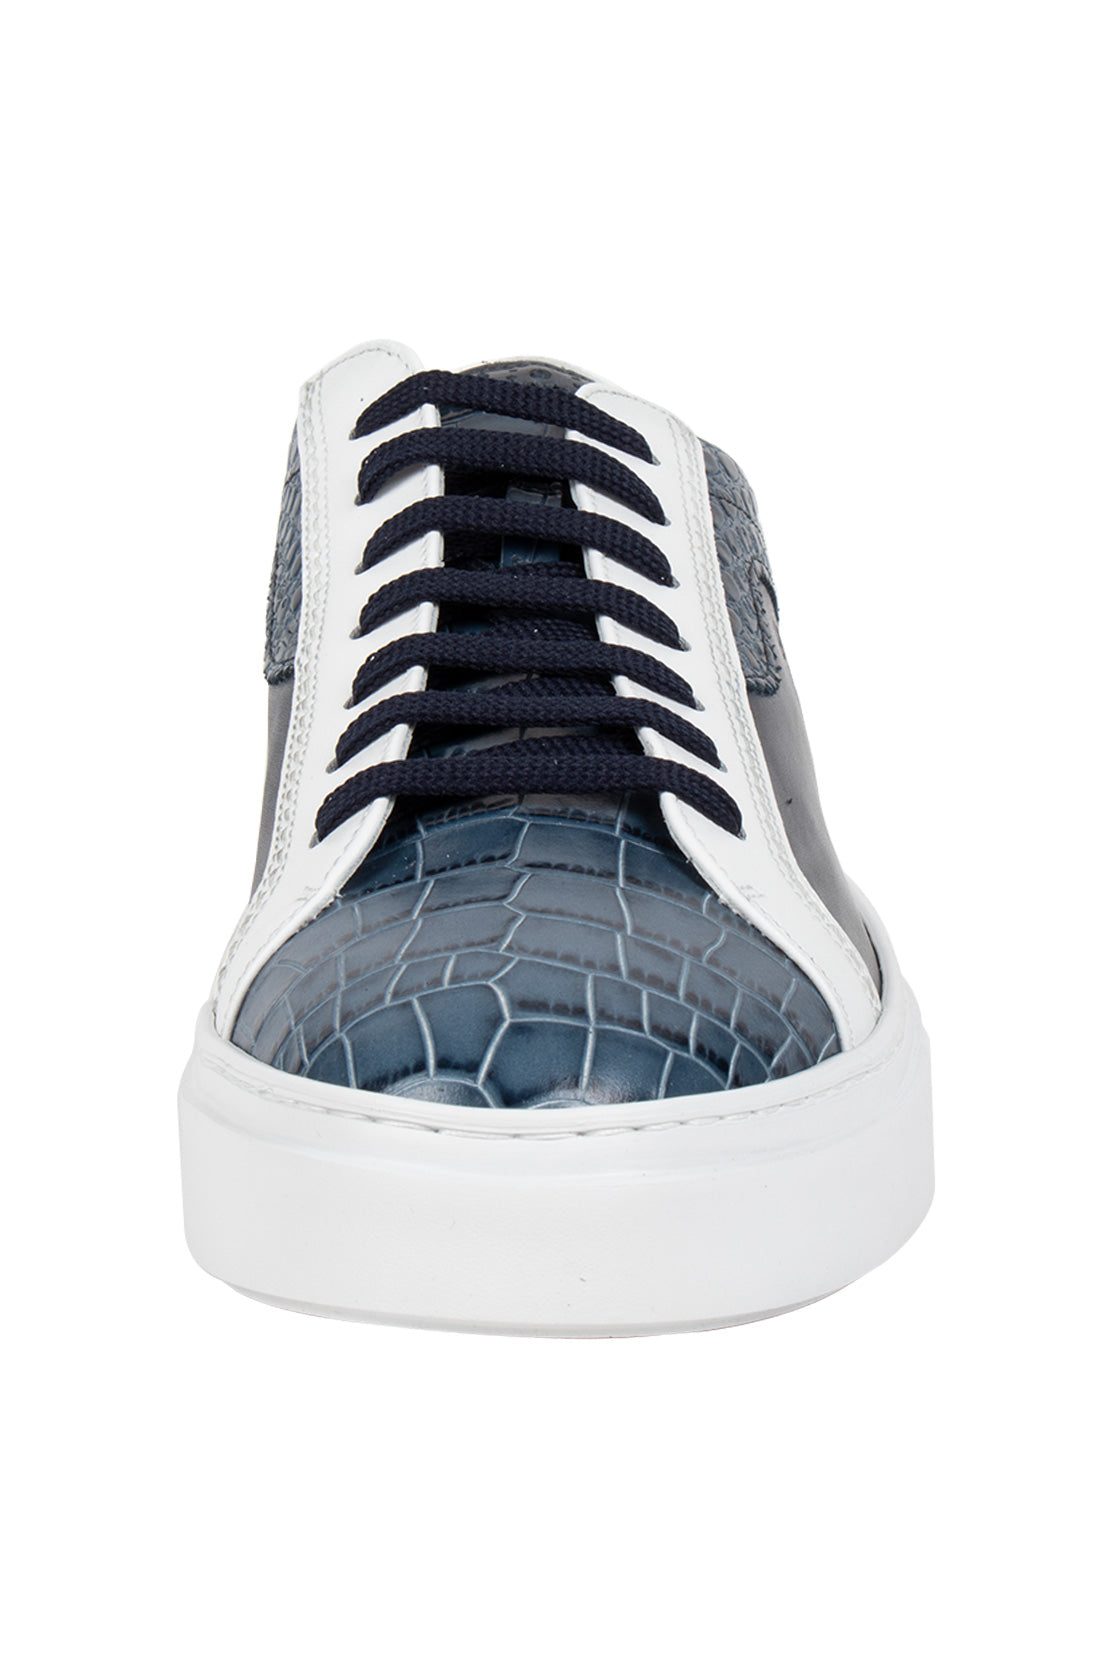 Galizio Torresi Lace Sneaker Sky/Wht/Blue